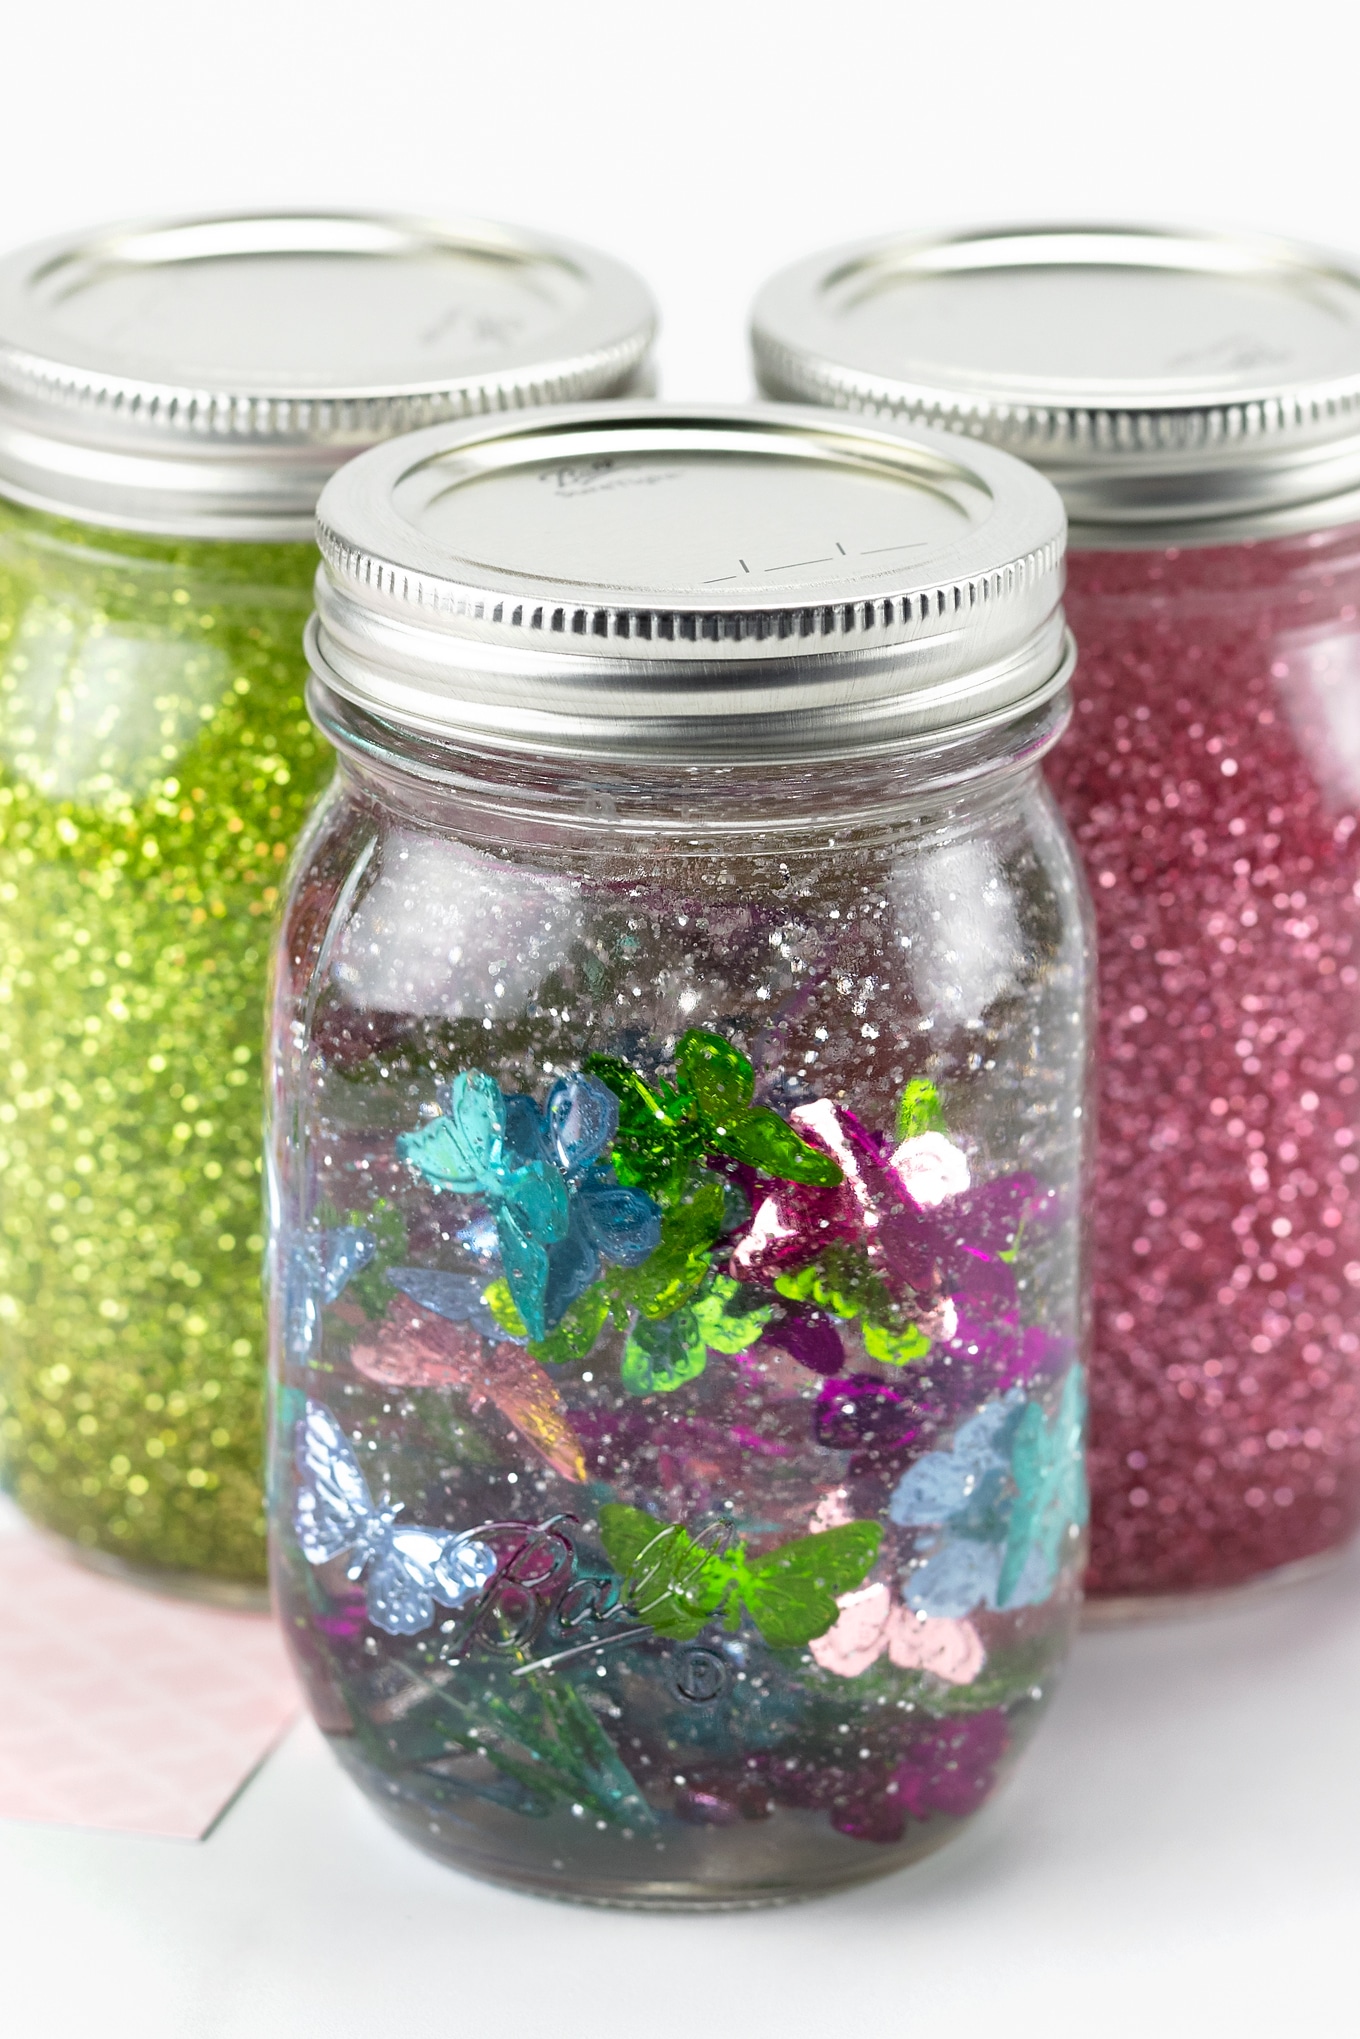  Make a Glittery Jar Vase Video